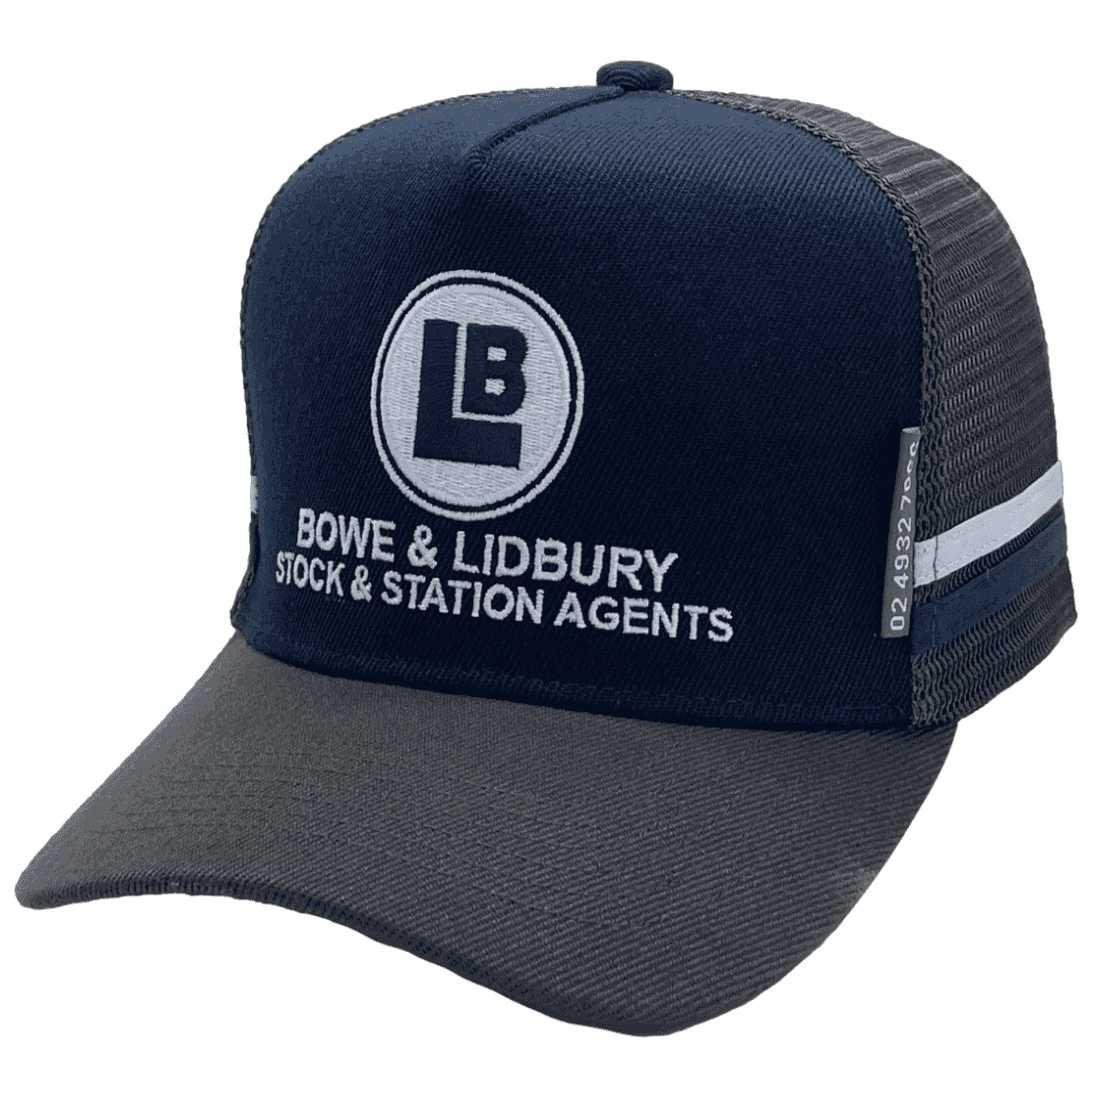 Bowe & Lidbury Stock & Station Agents HP Midrange Aussie Trucker Hats Acrylic